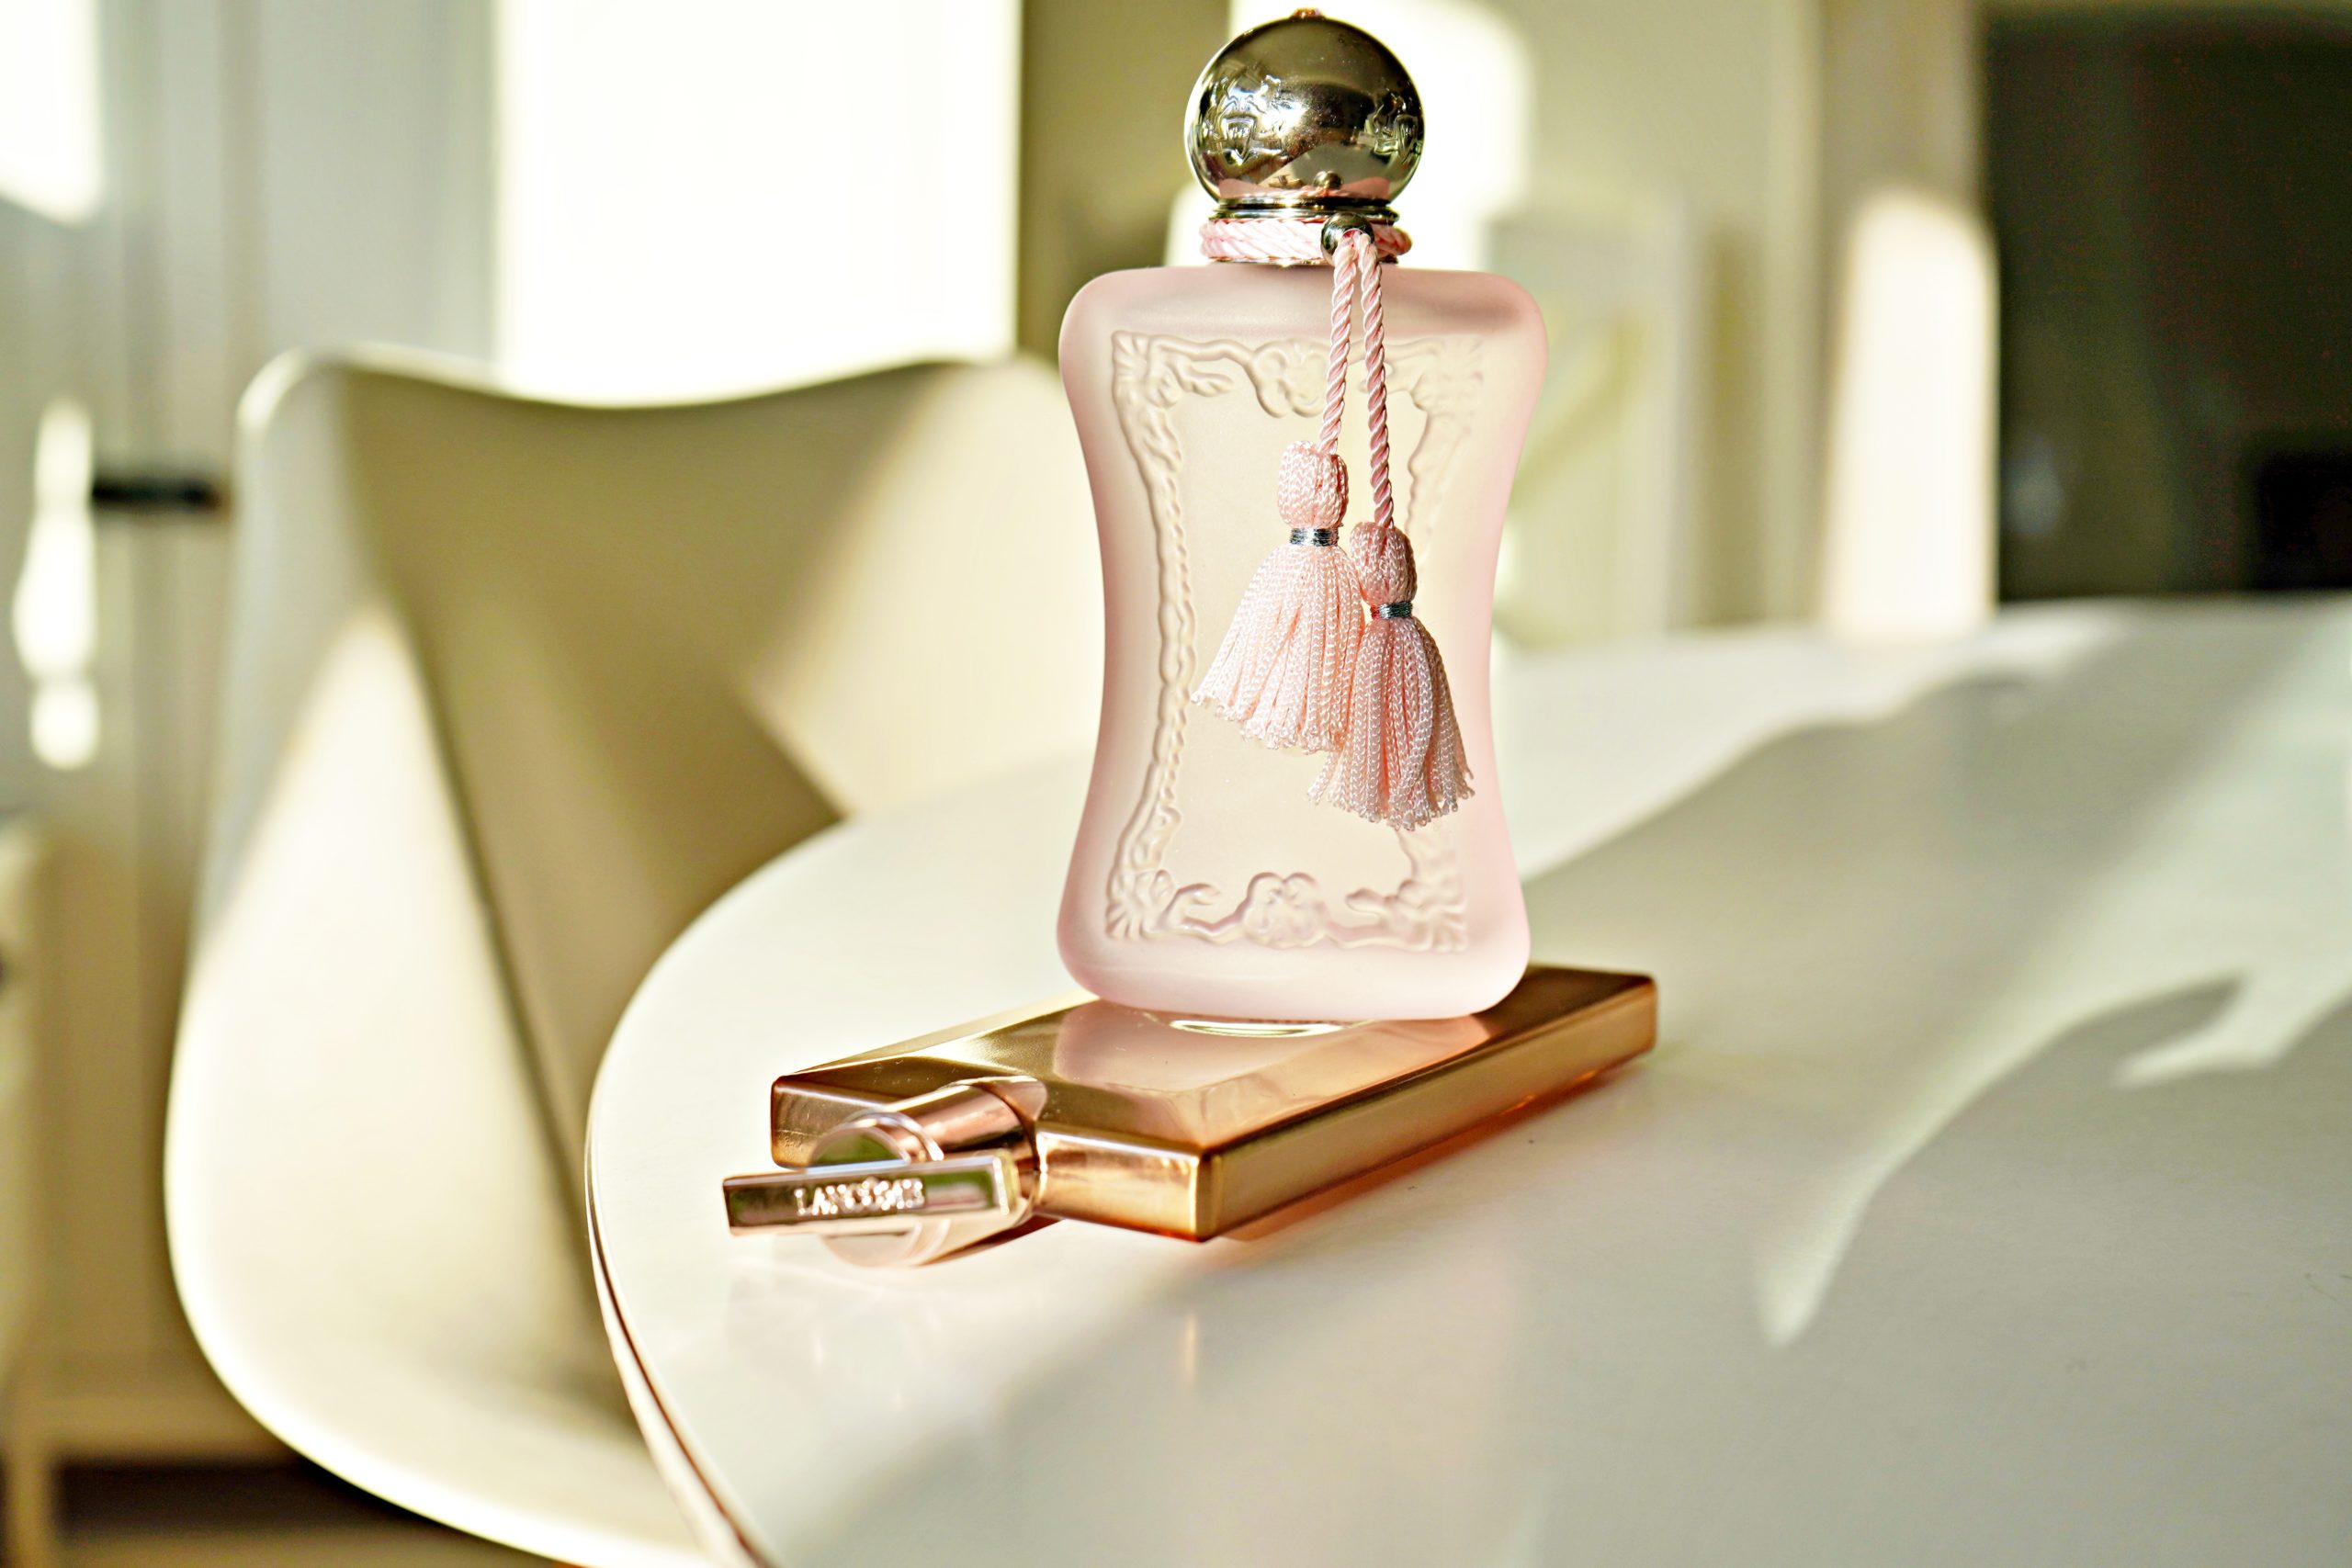 Parfums de Marly Delina La Rosee and Lancome Idole | Beauty Routine Checklist